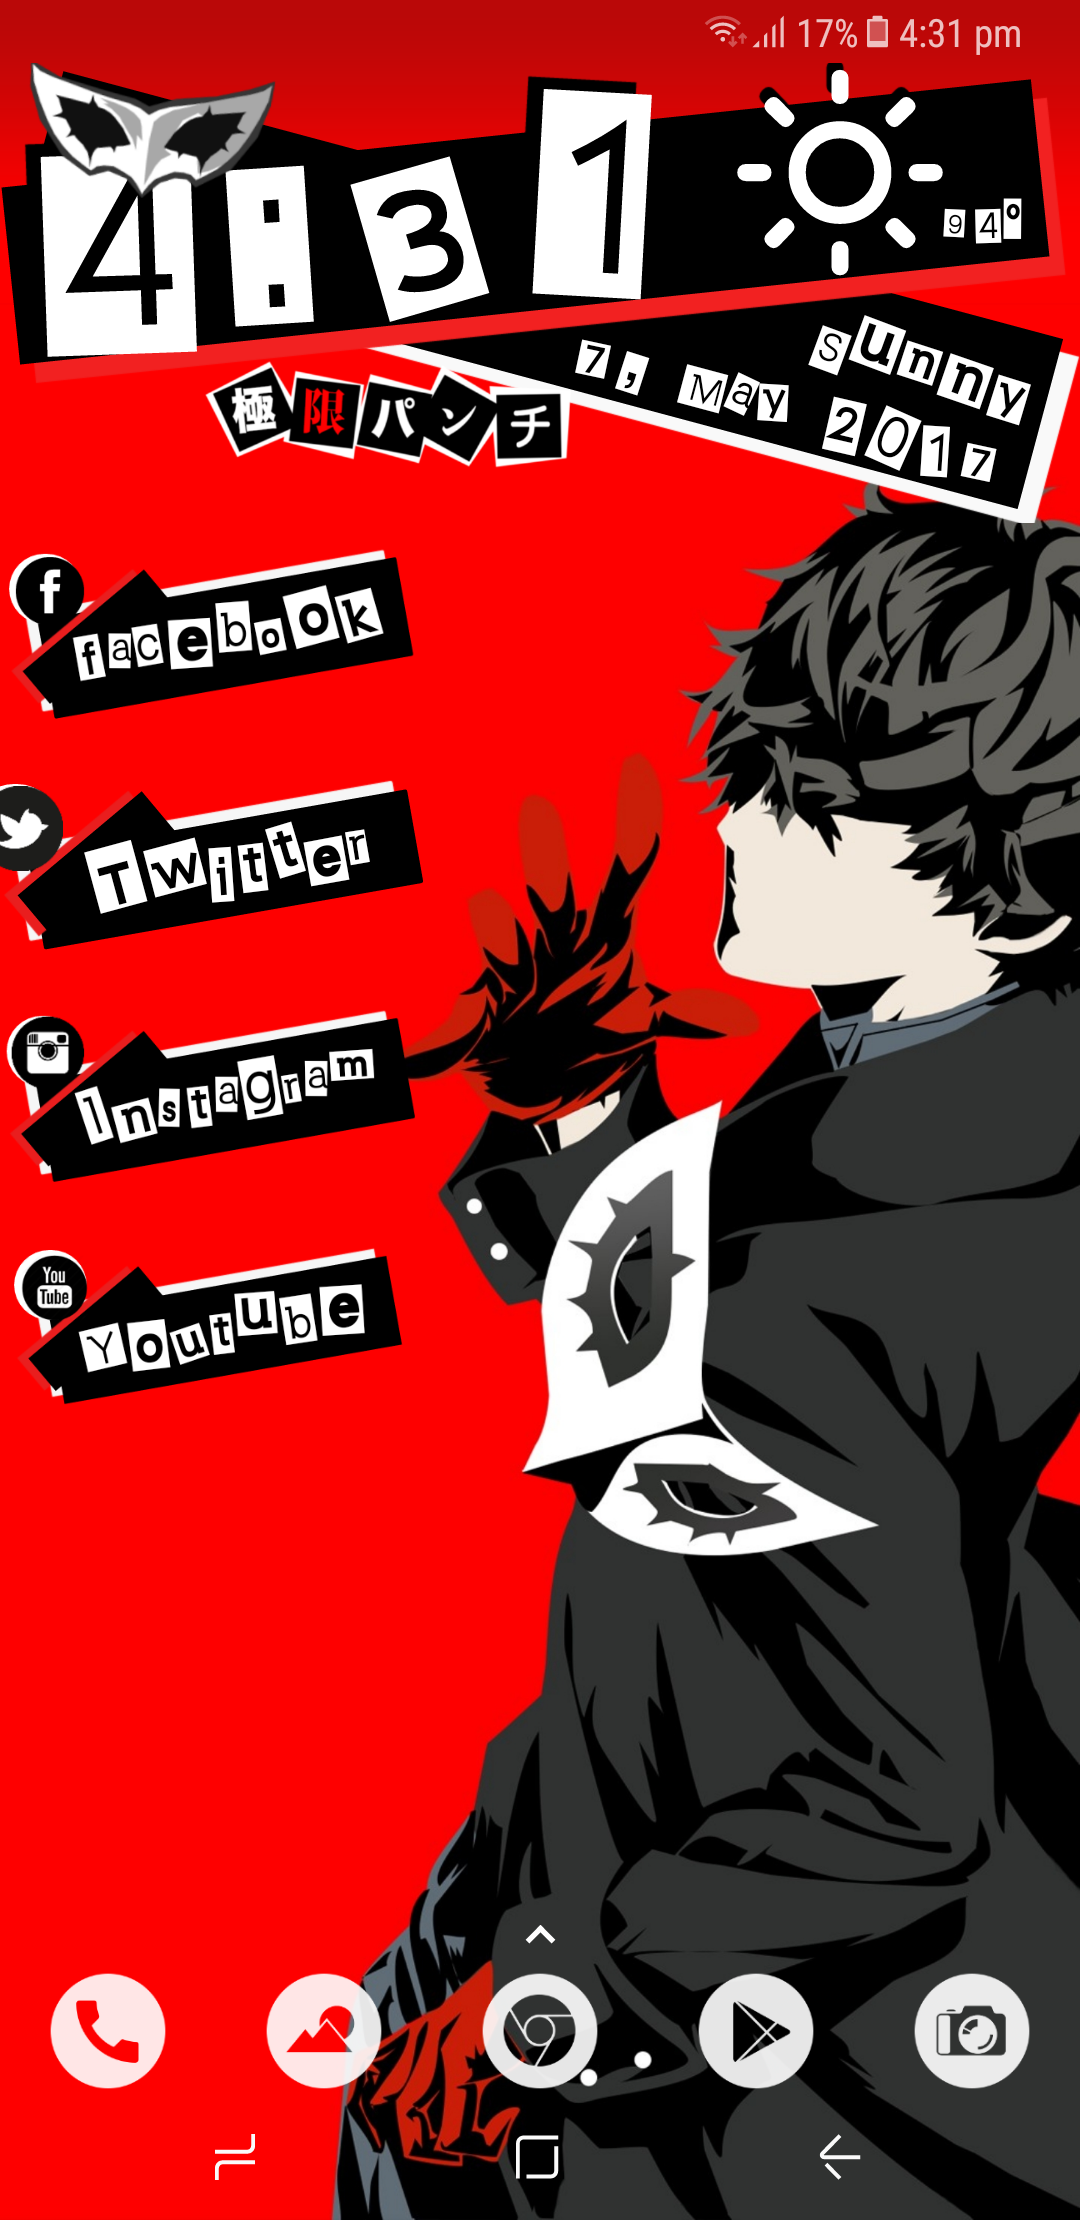 Joker Persona 5 Cosplay - HD Wallpaper 